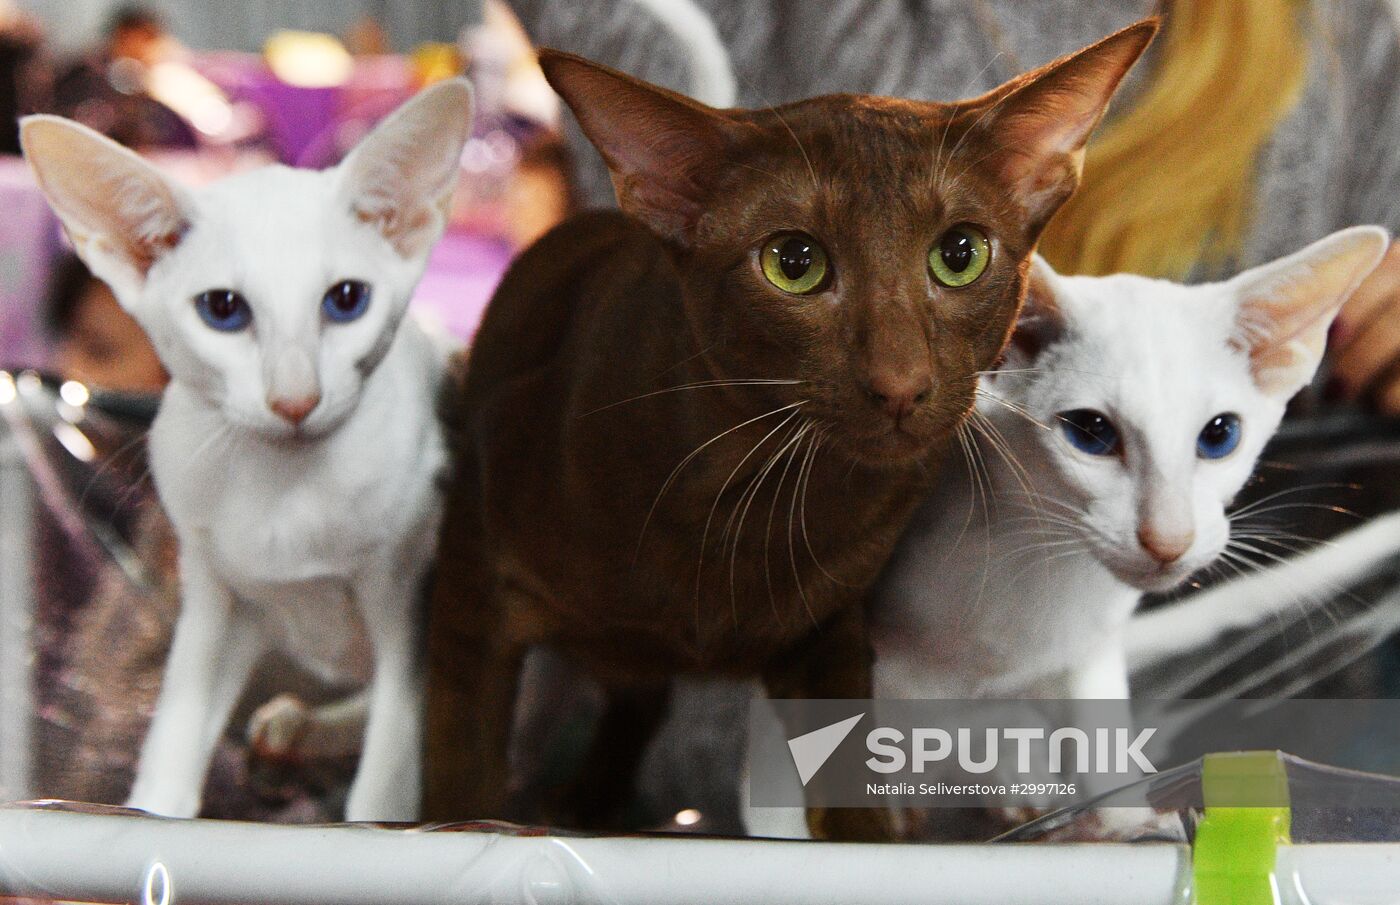 Cat-Salon-December cat show